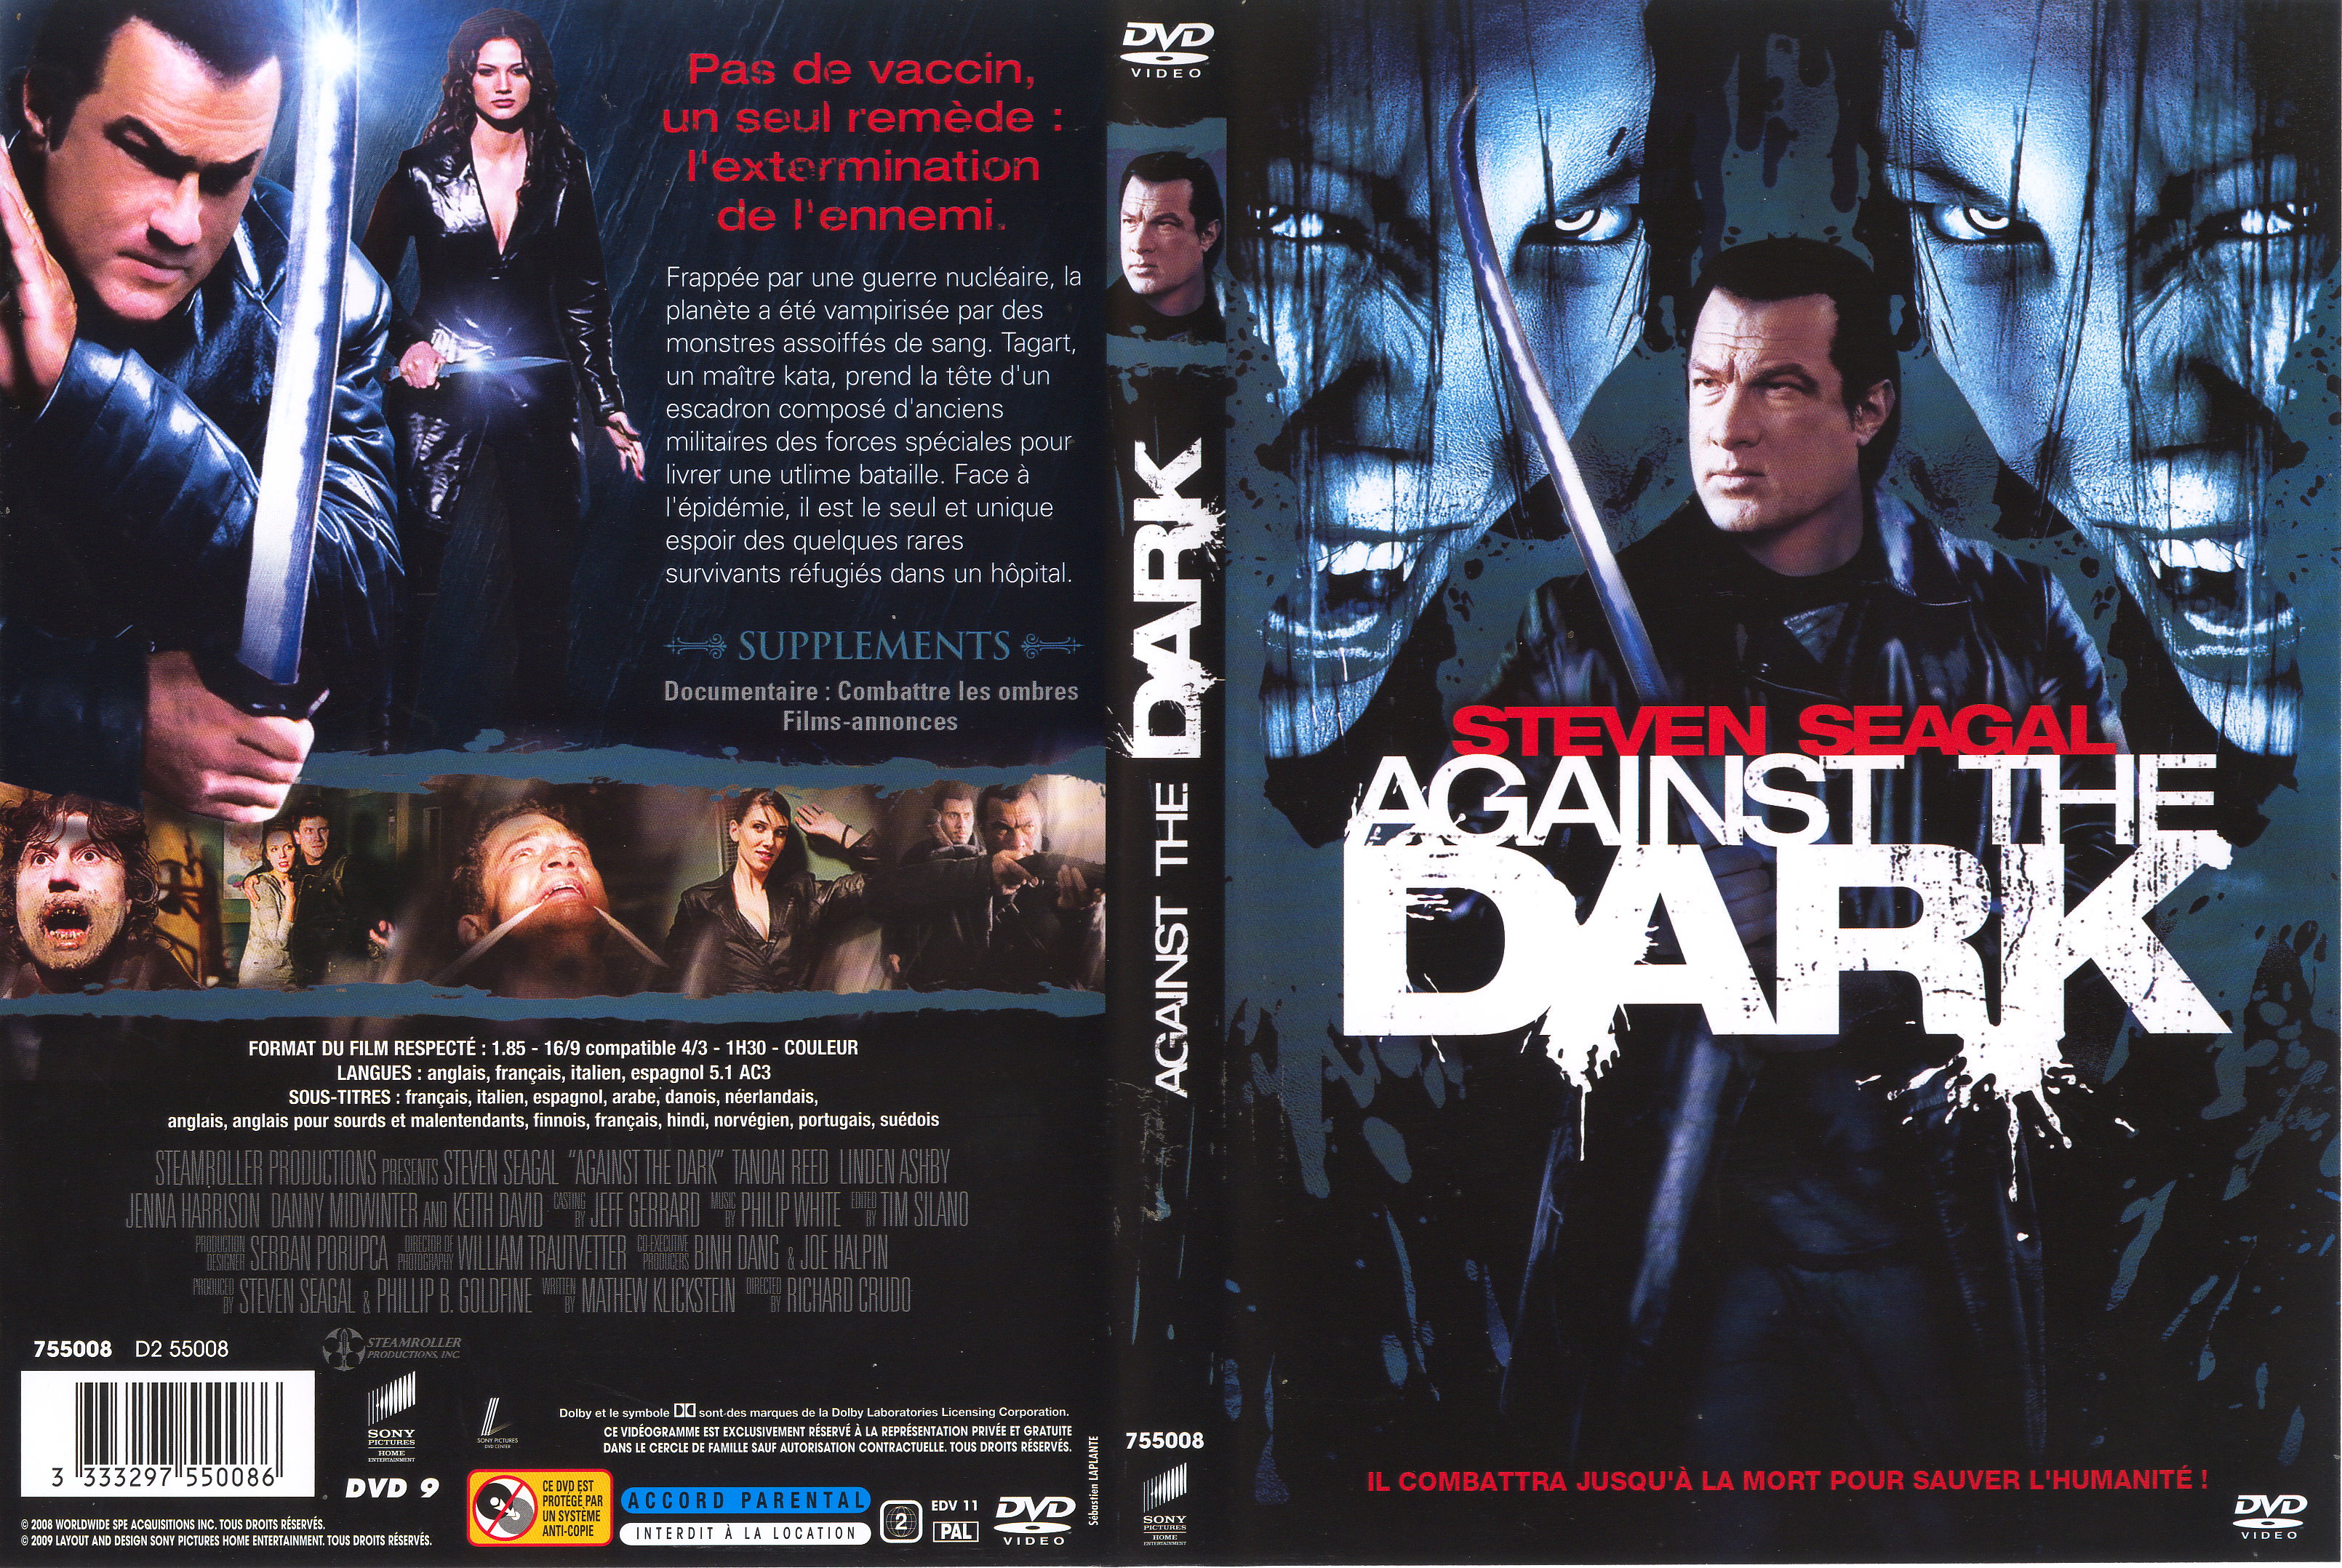 Jaquette DVD Against the dark